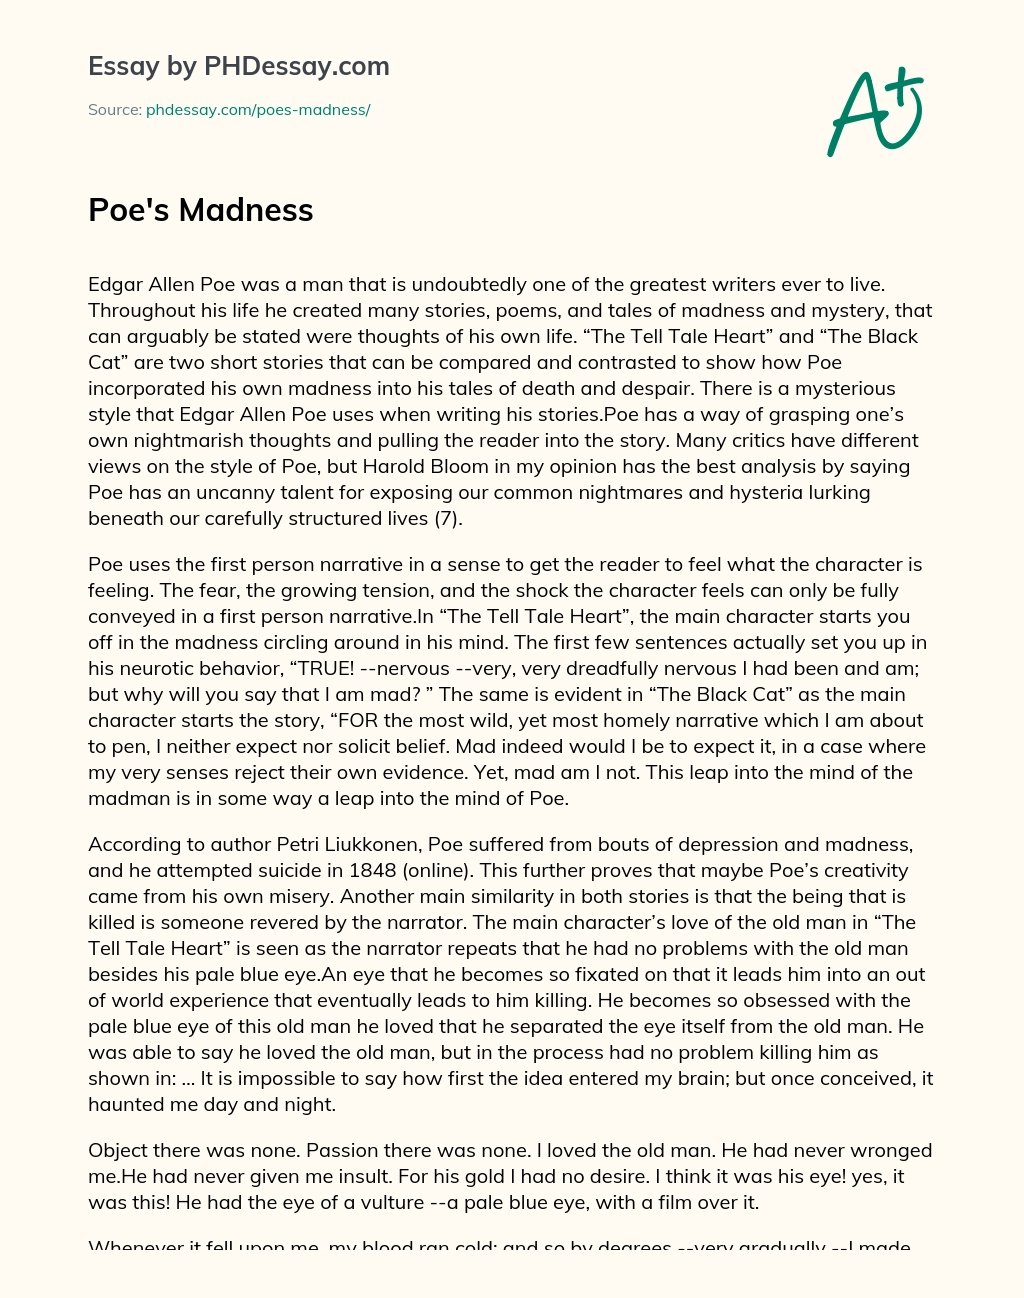 Poe’s Madness essay